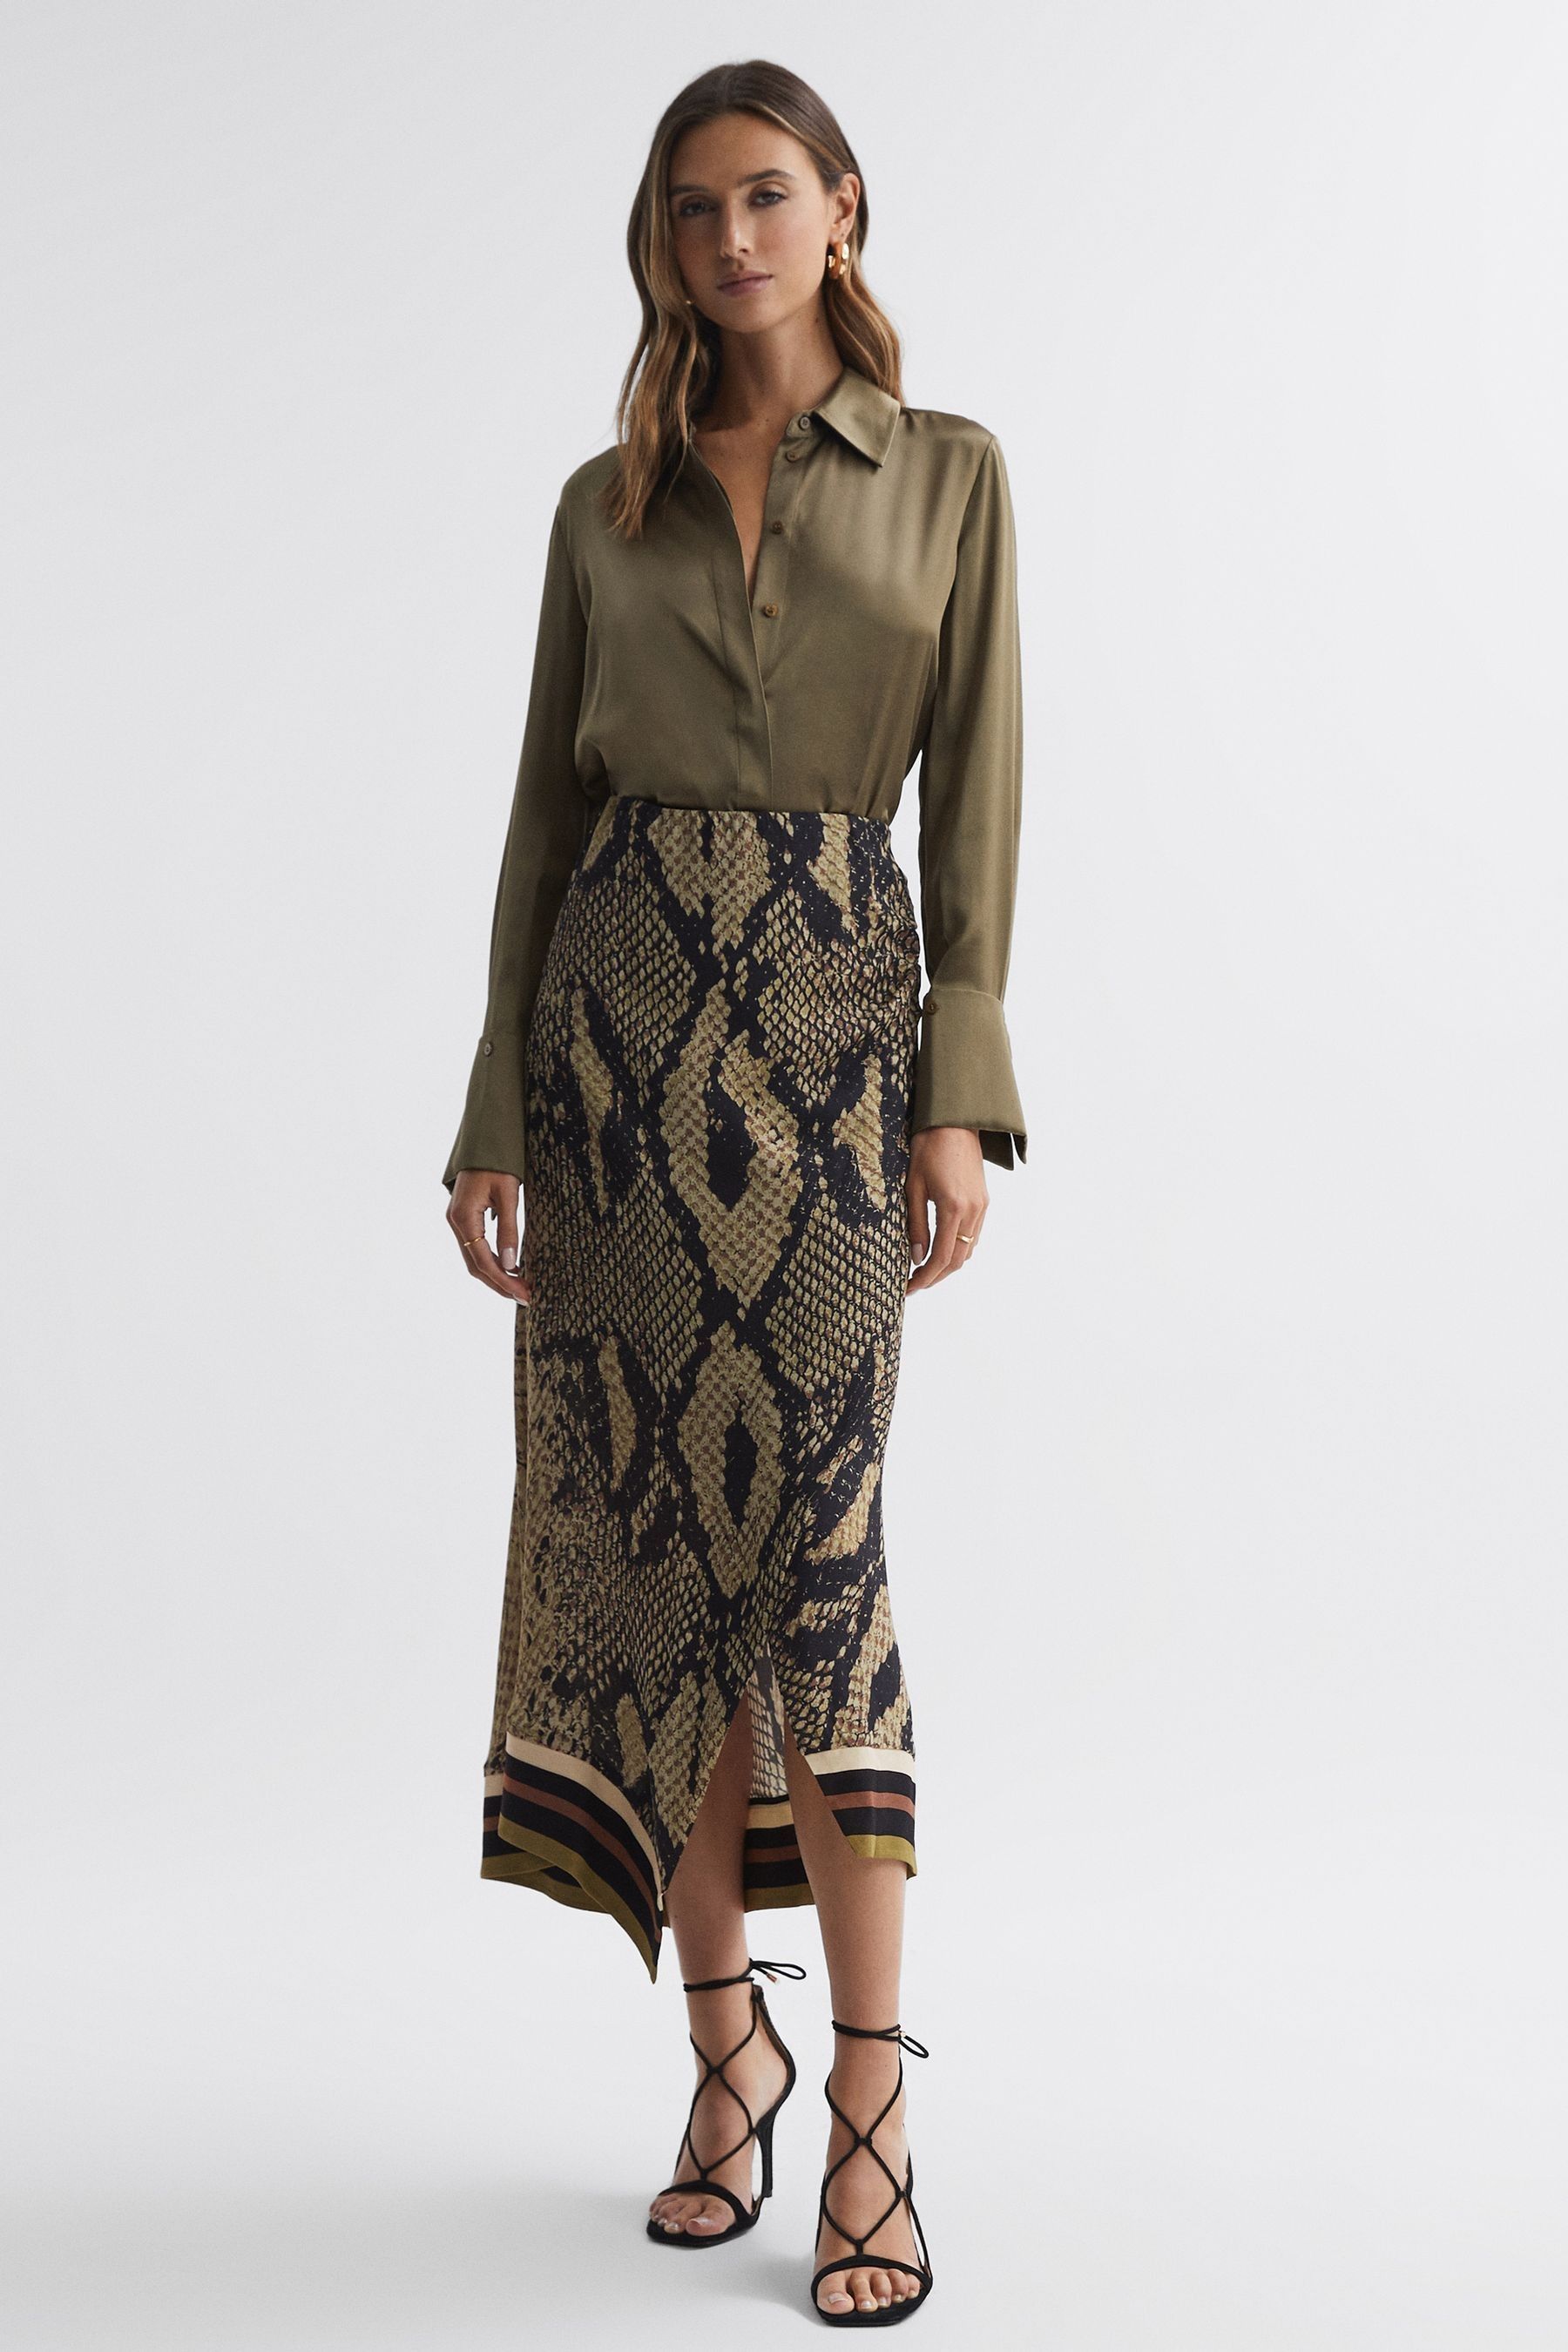 Reiss Daria - Brown Snake Print Midi Skirt, Us 2